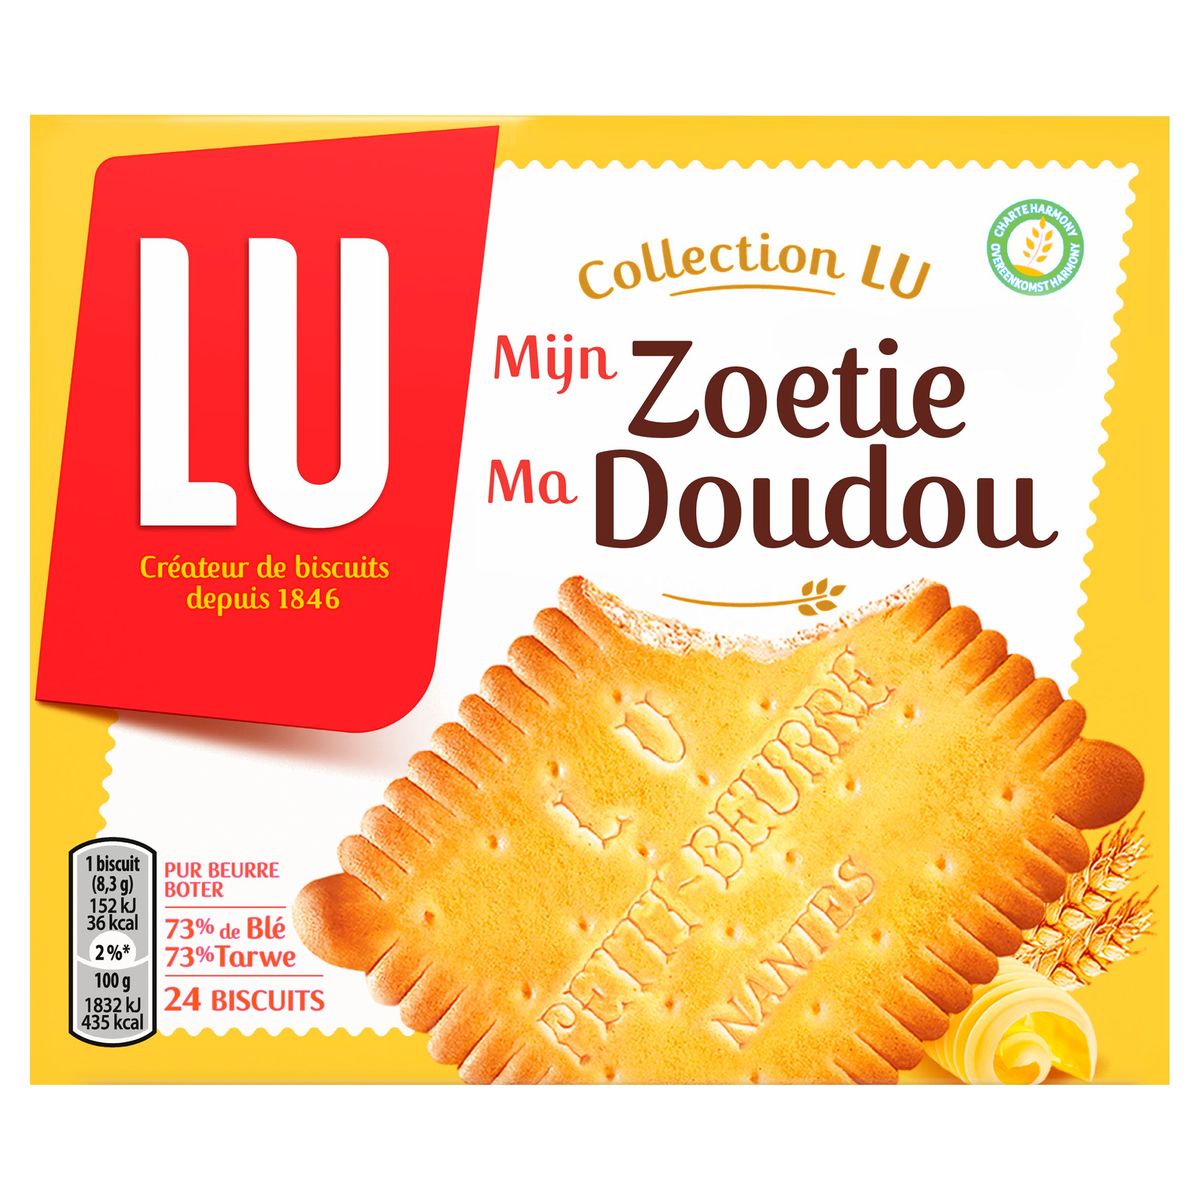 LU Véritable Petit Beurre Koeken 200 g